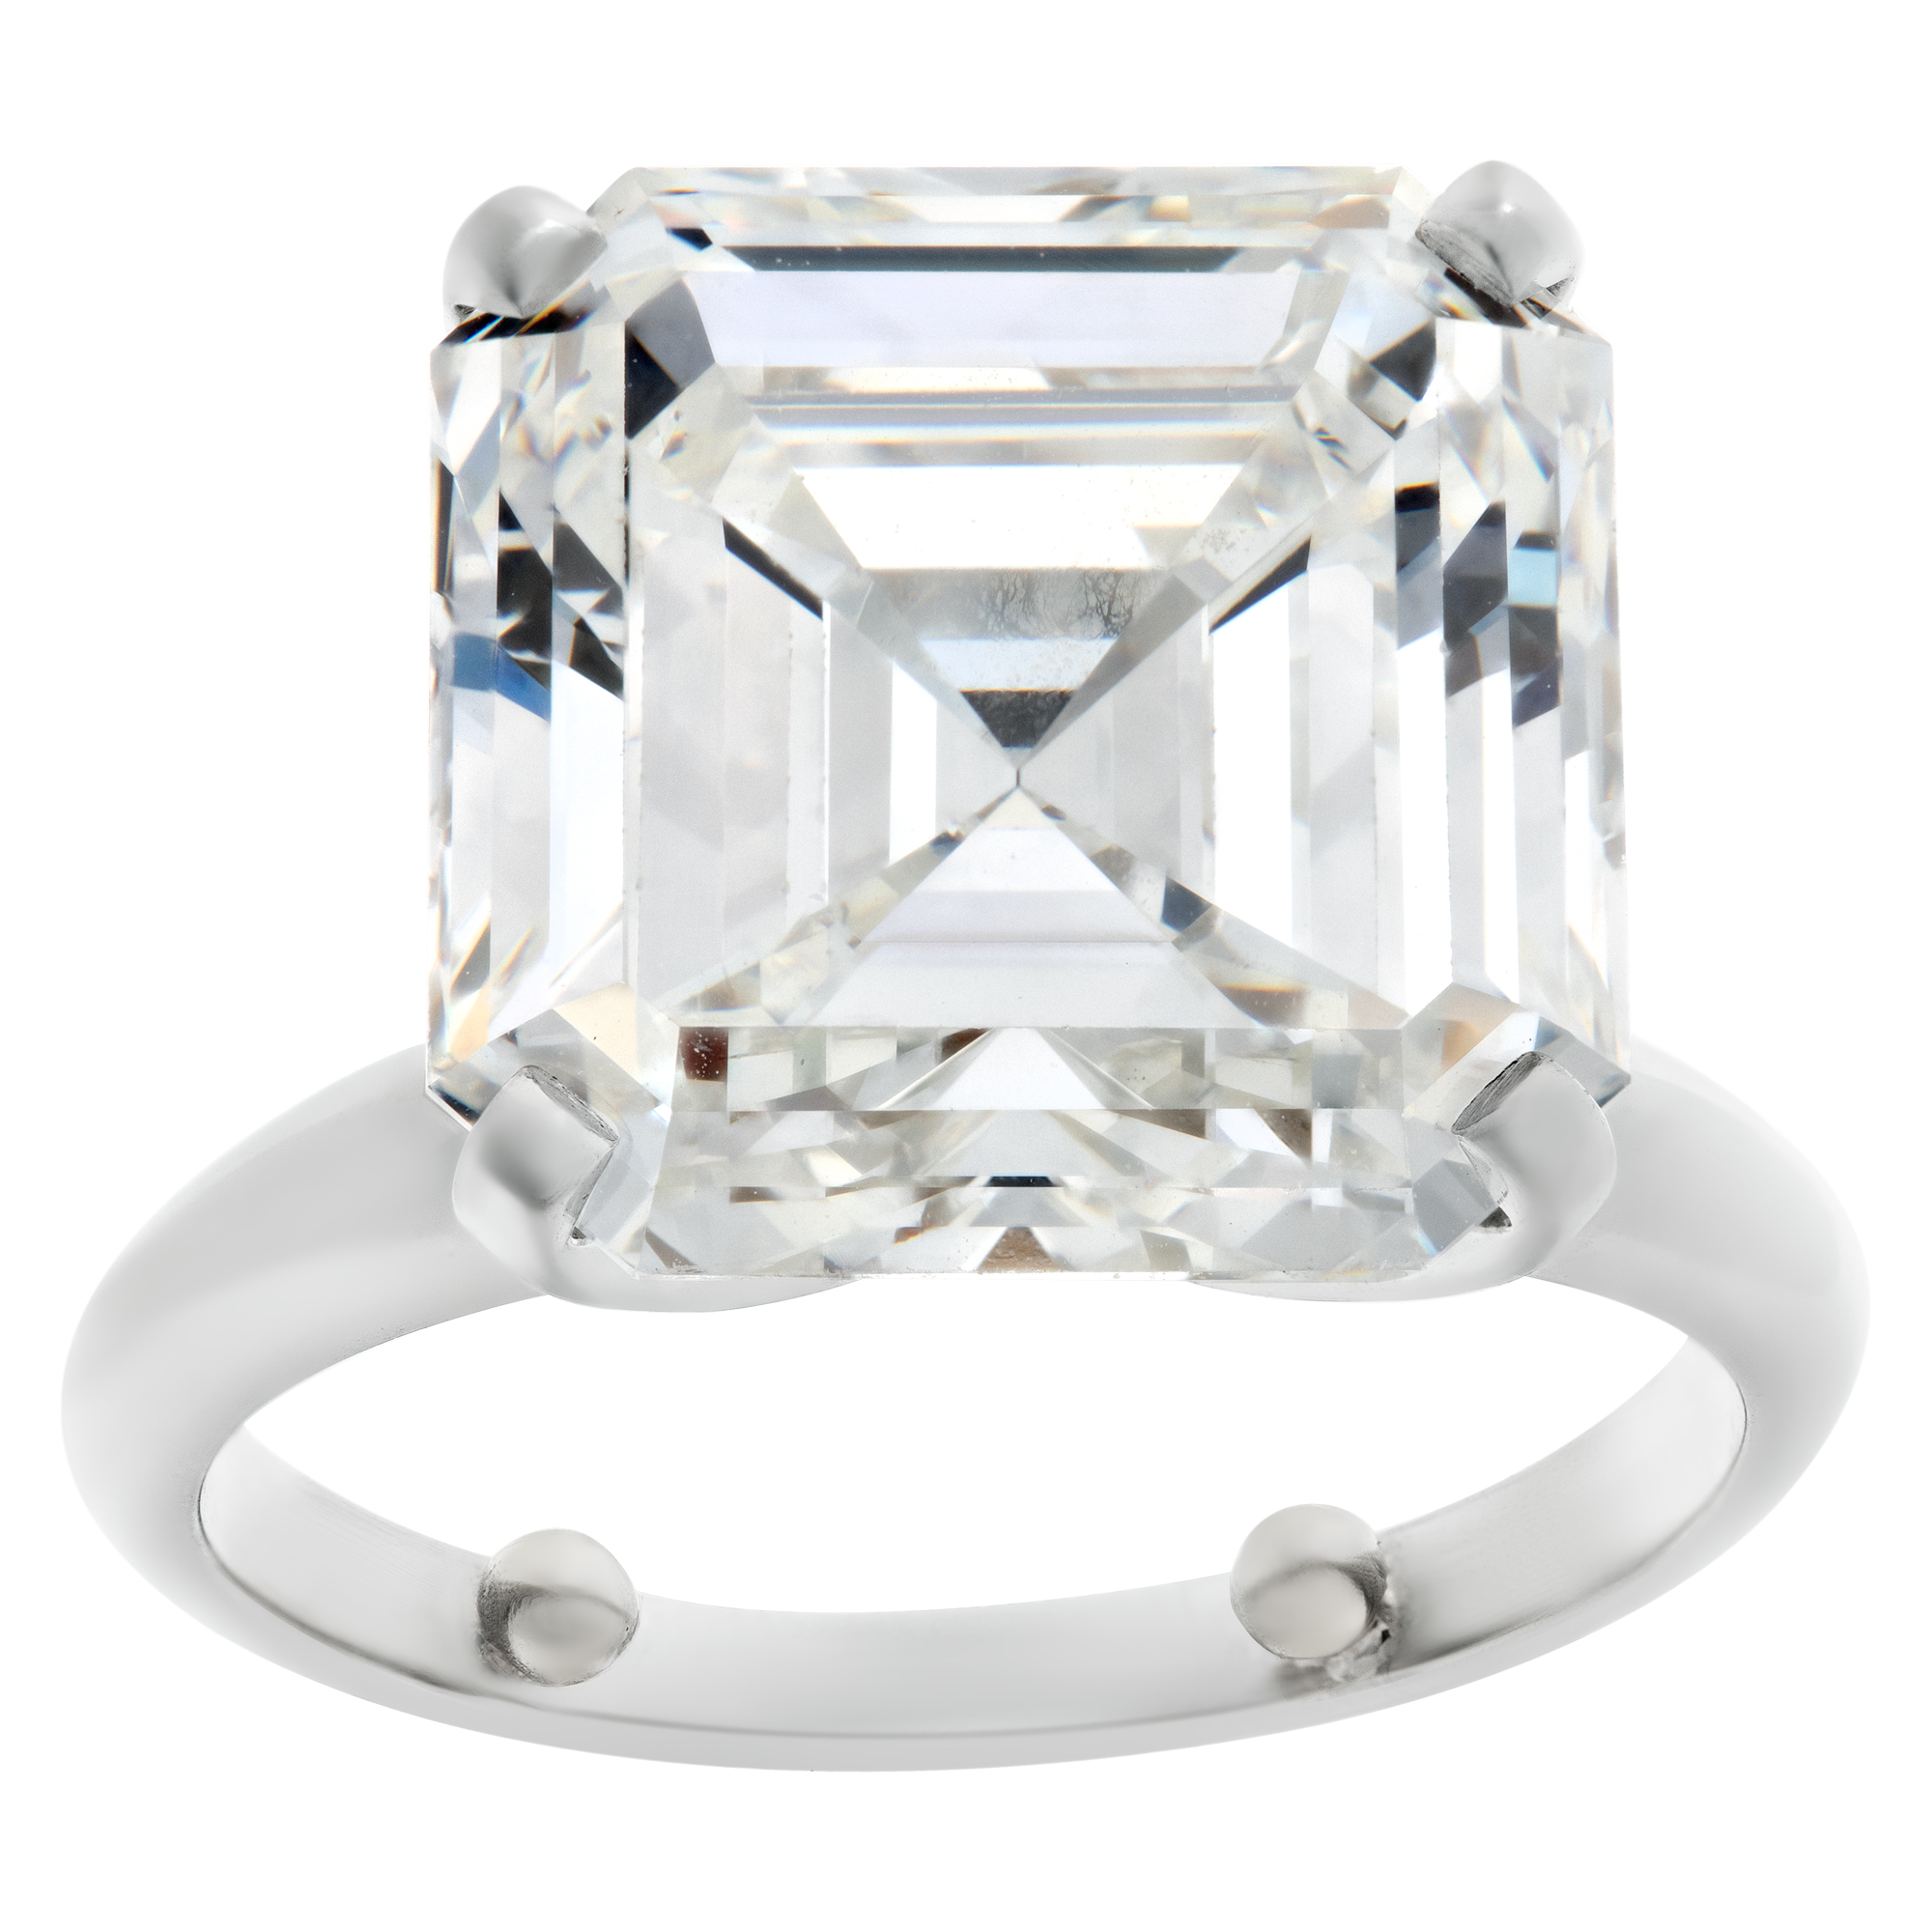 GIA certified asscher cut diamond 9.03 carat (G Color, Vs 1 Clarity) ring image 1